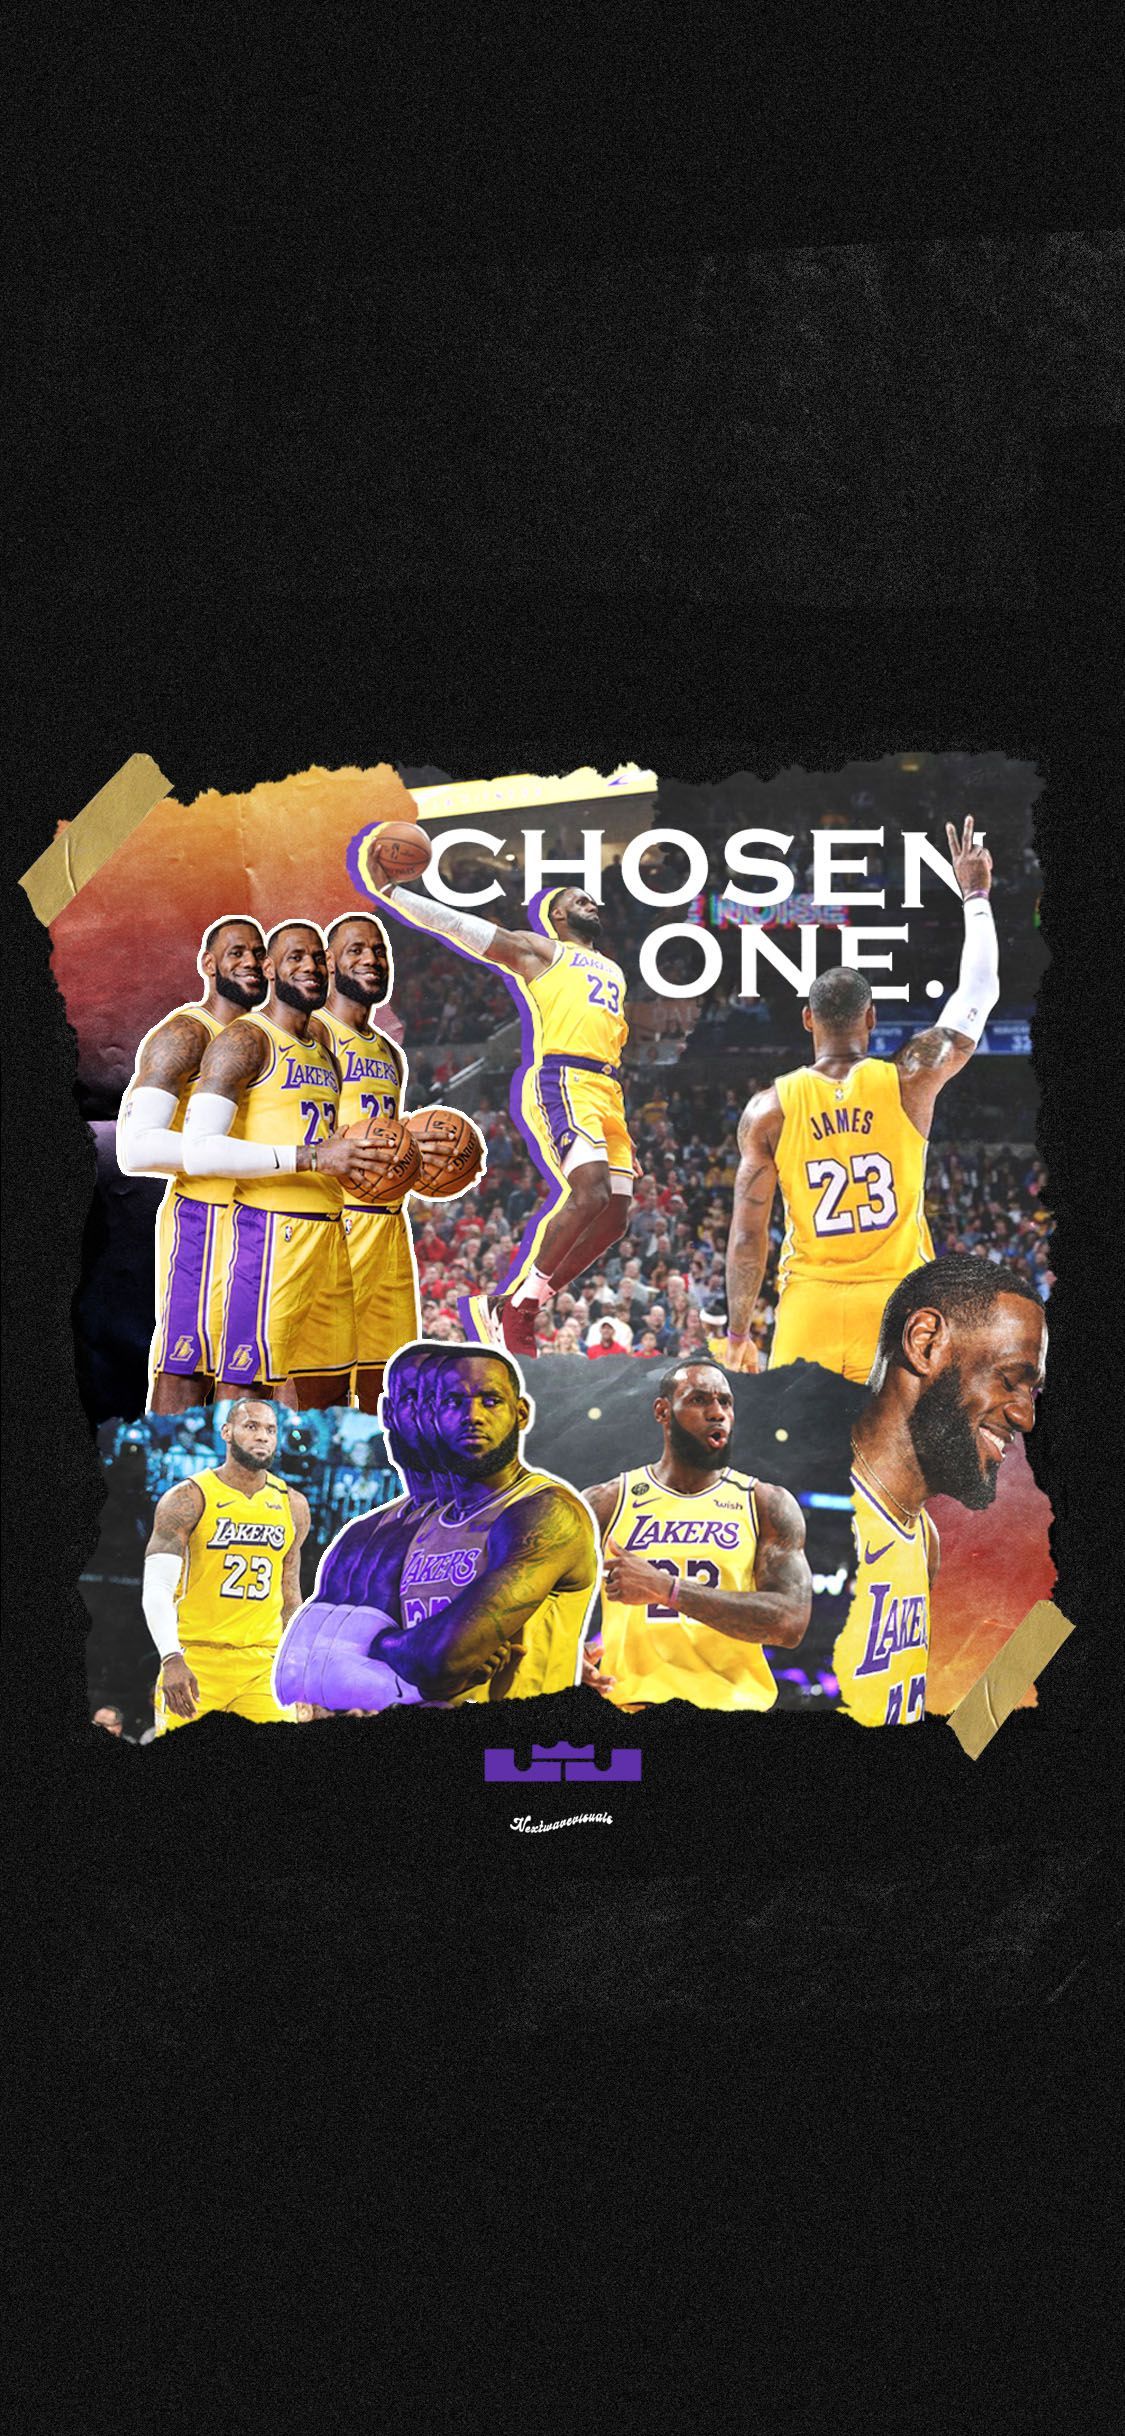 Lakers Lebron James iPhone Wallpaper. Lebron james, Basketball wallpaper, Lebron james basketball